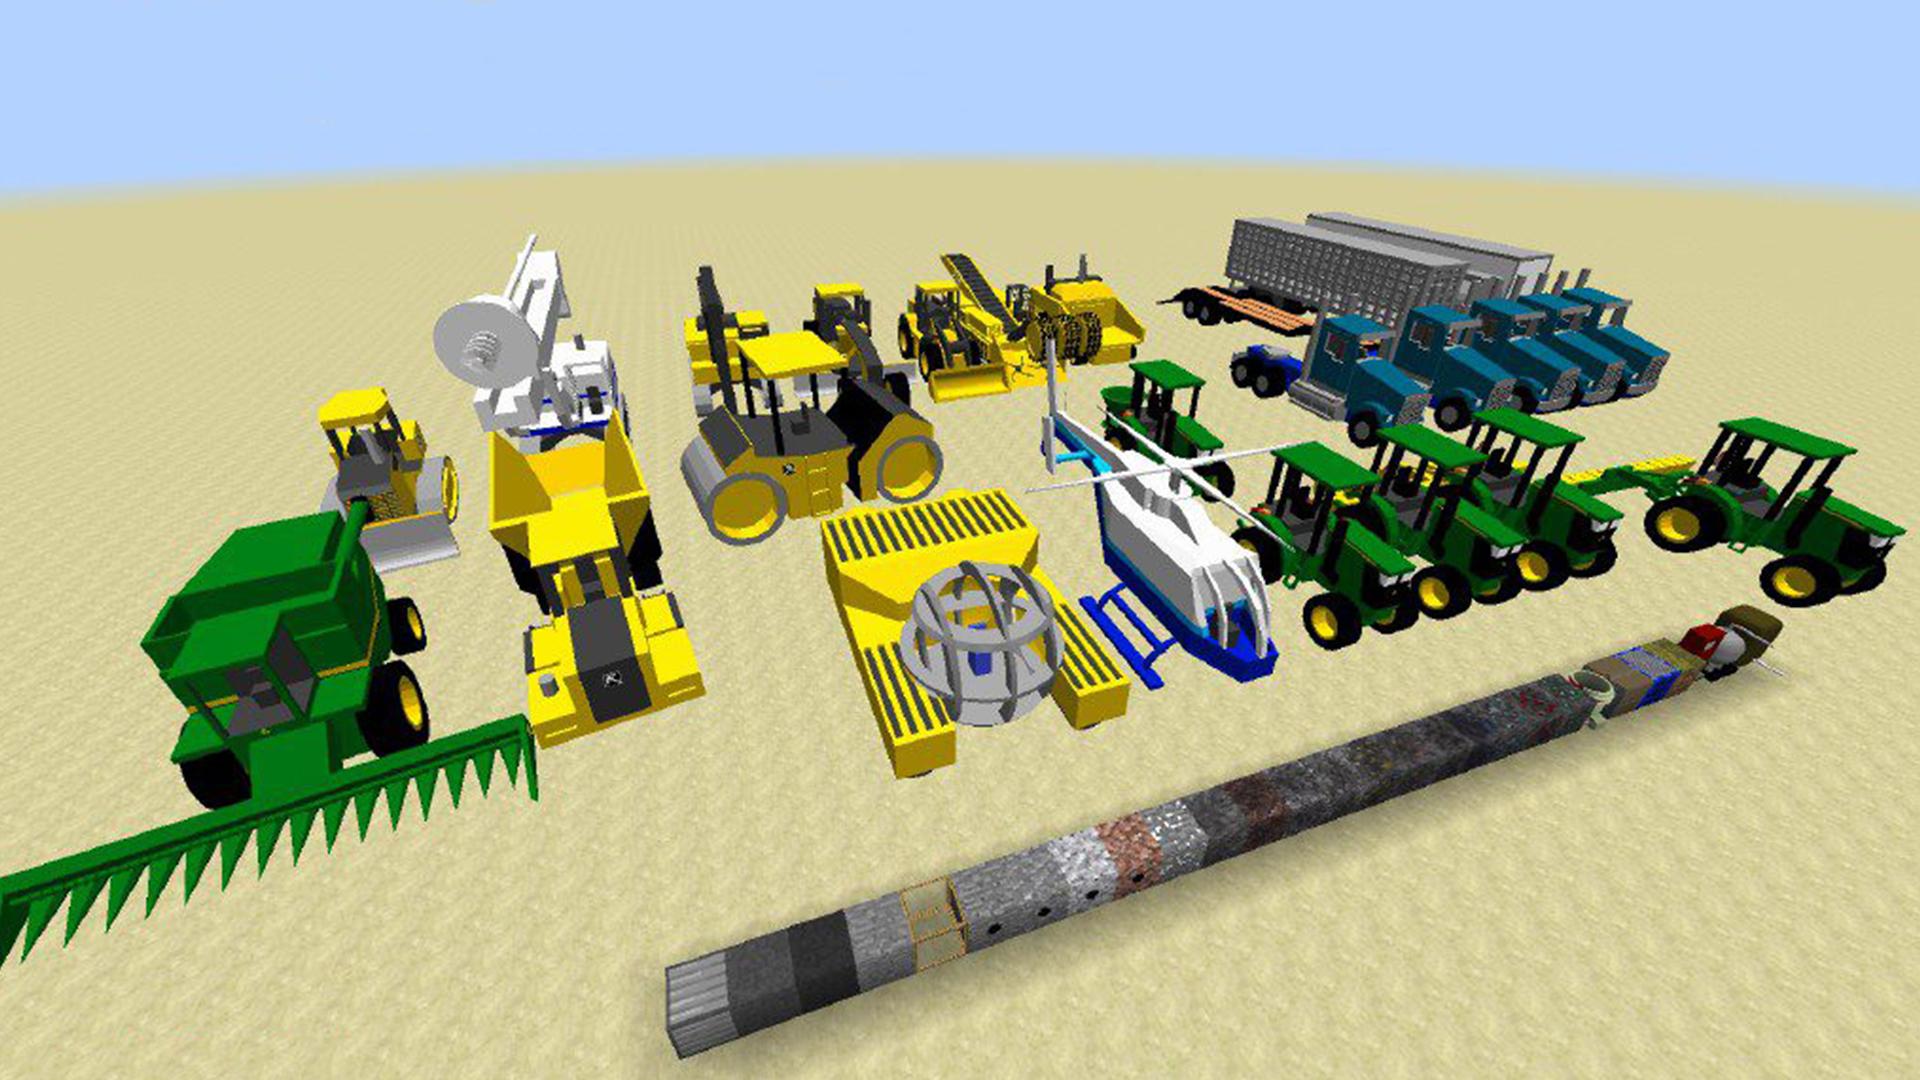 Экскаватор майнкрафт 1.12.2. Heavy_Machinery_Mod_1.12.2. Minecraft Mod тракторы 1.16. Комбайн в МАЙНКРАФТЕ мод. Экскаватор майнкрафт